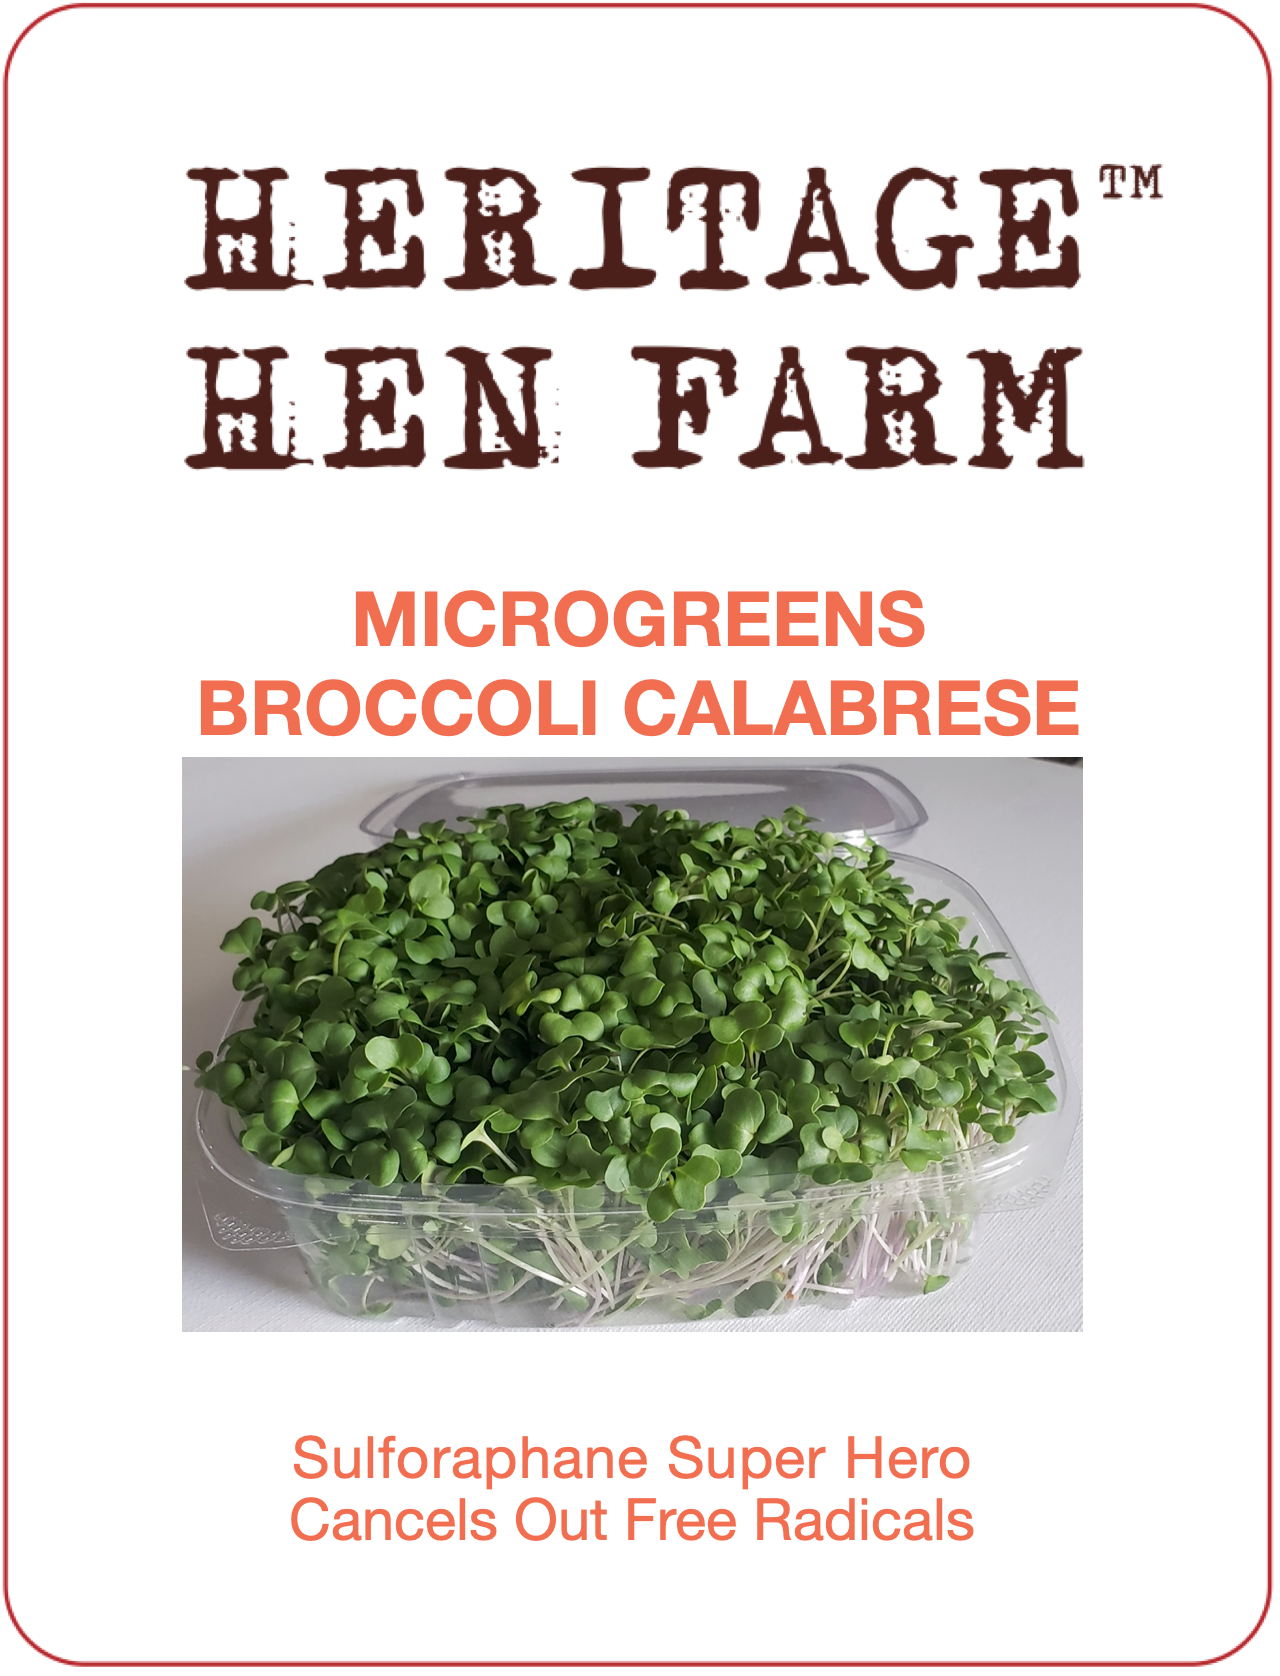 Broccoli MicroGreens